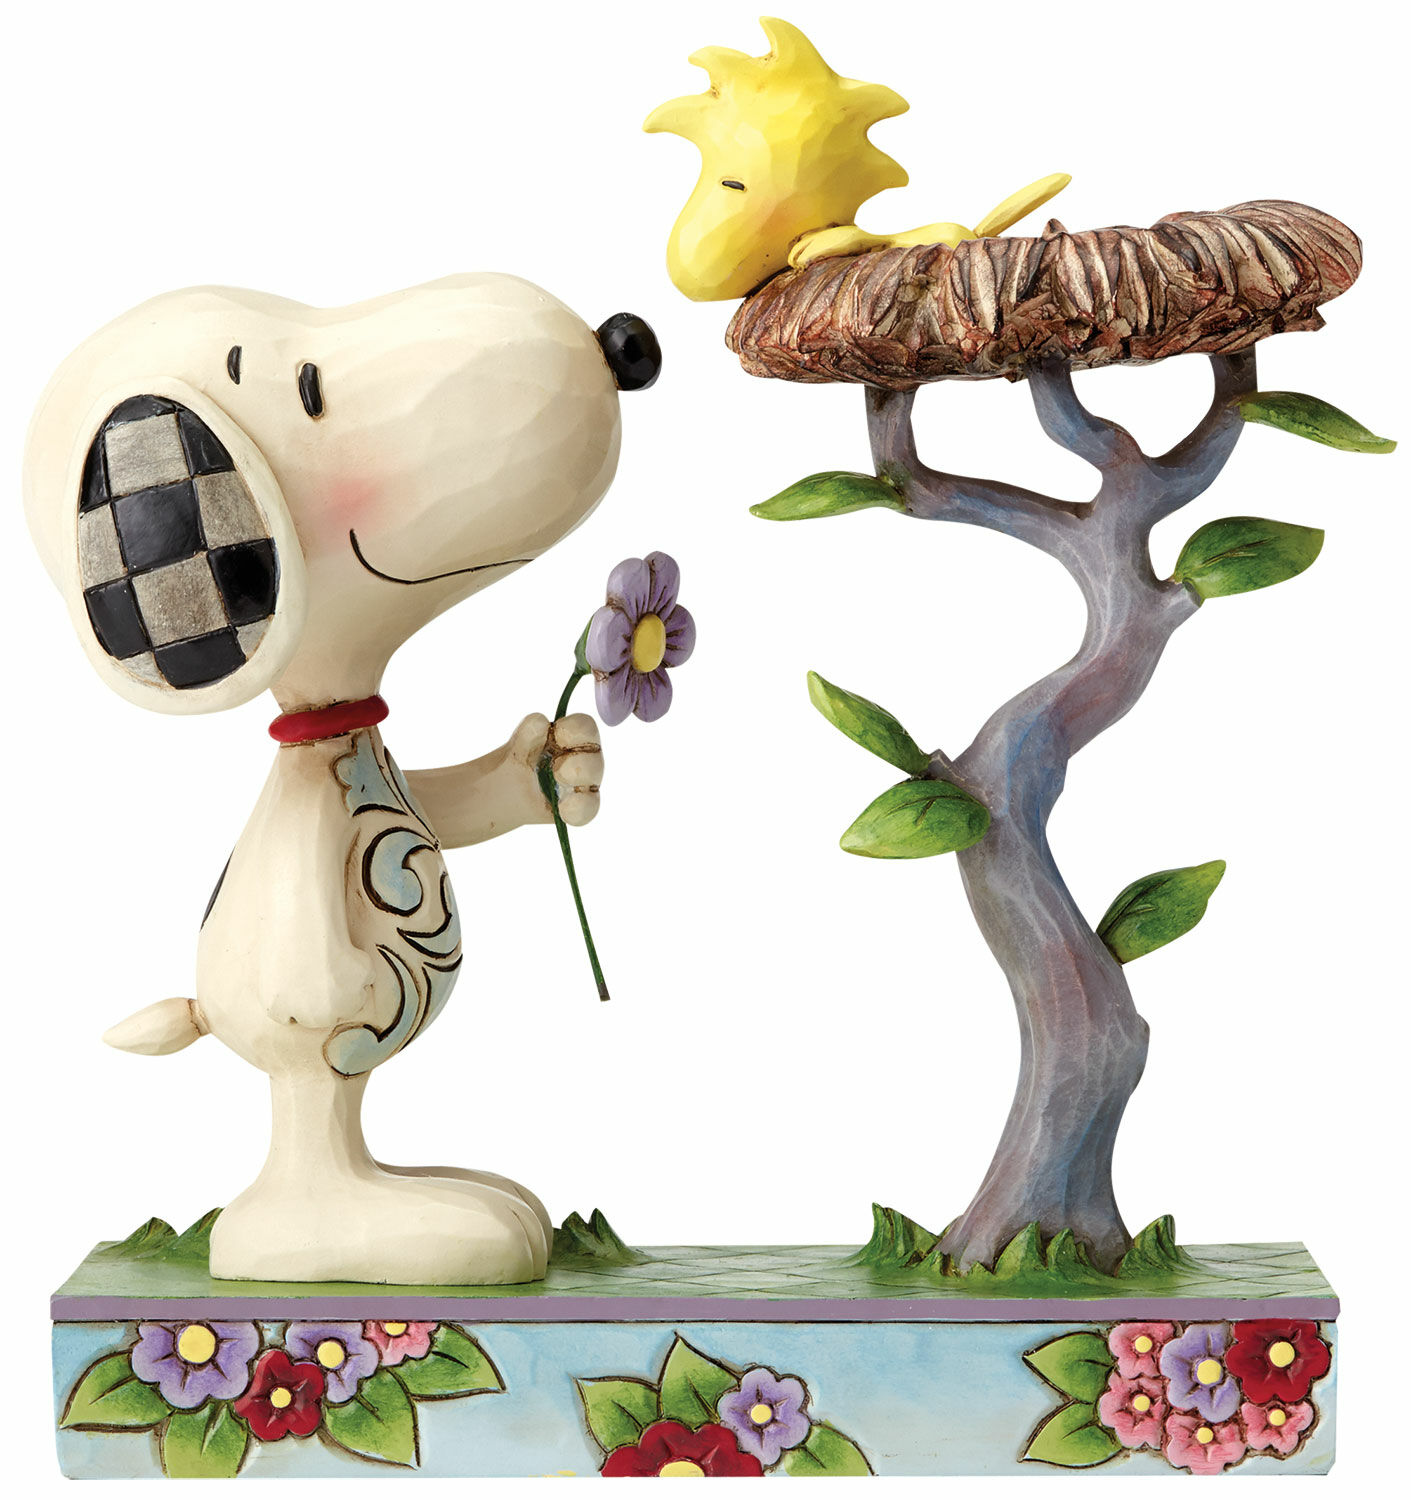 Skulptur "Snoopy og Woodstock i reden", støbt von Jim Shore